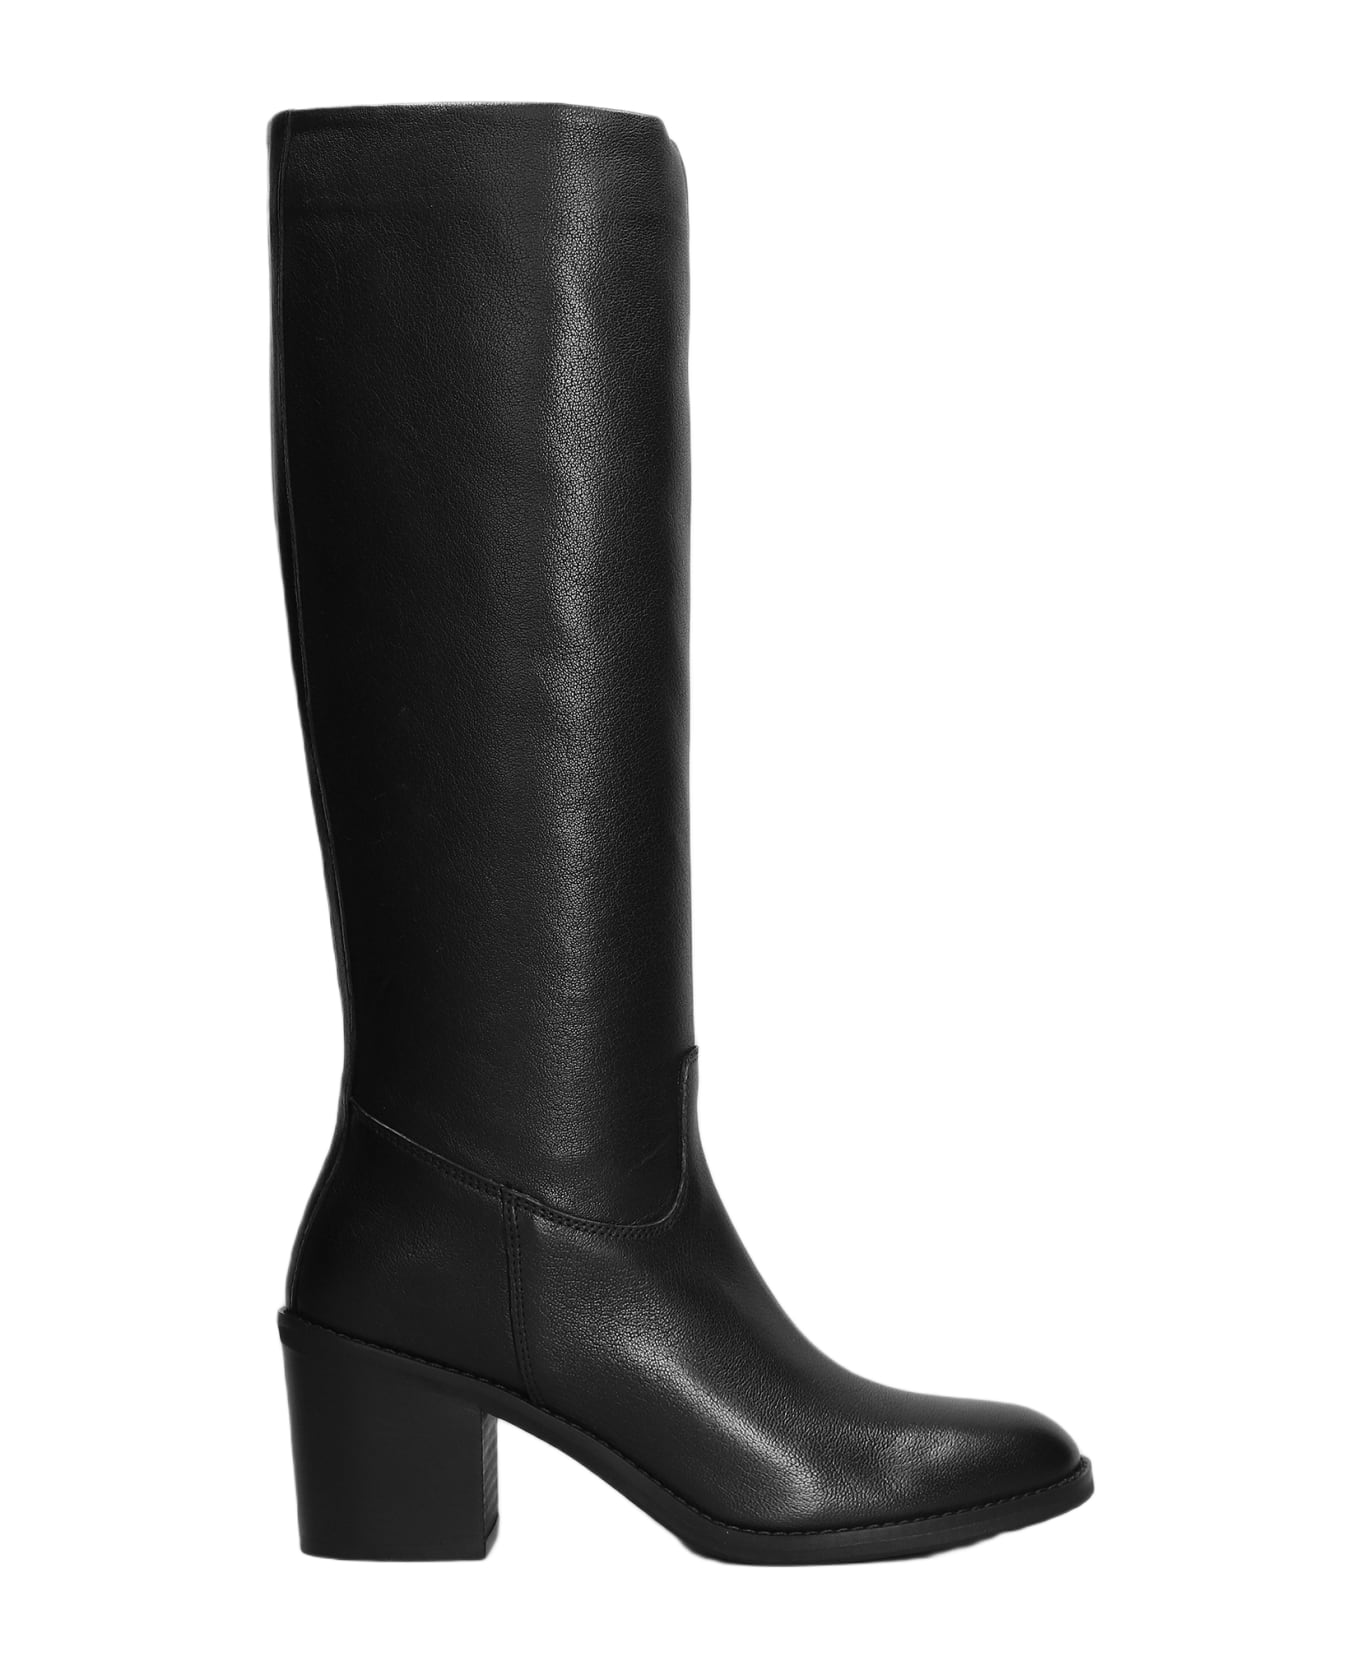 Julie Dee High Heels Boots In Black Leather - black